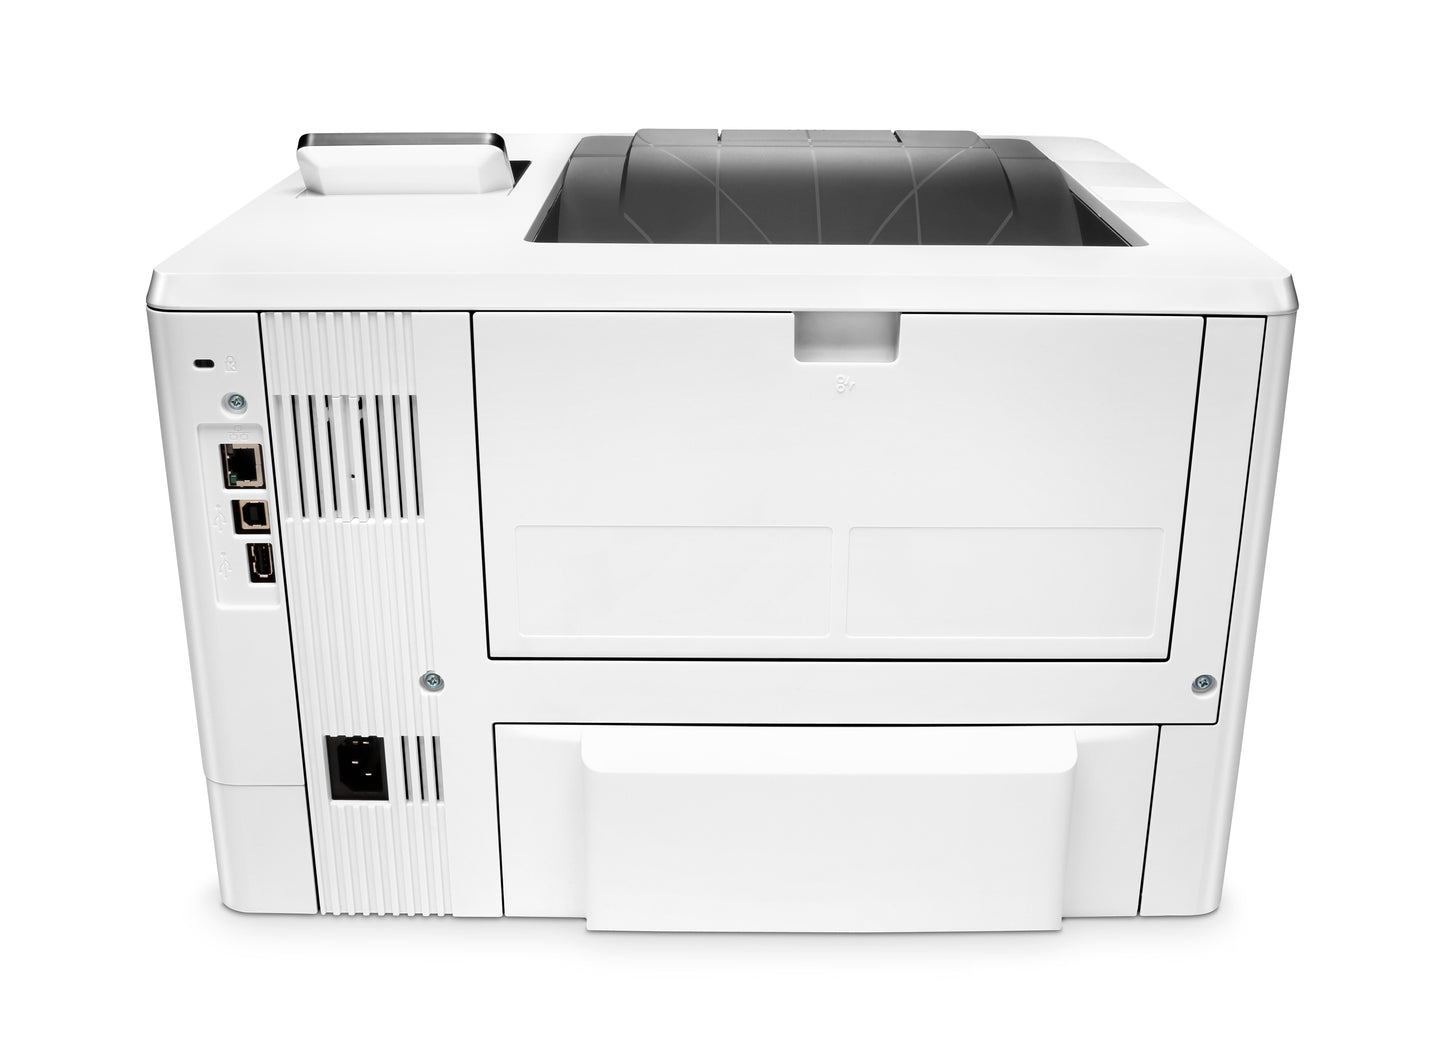 Impresora Laser Blanco y Negro HP M501dn Duplex Red